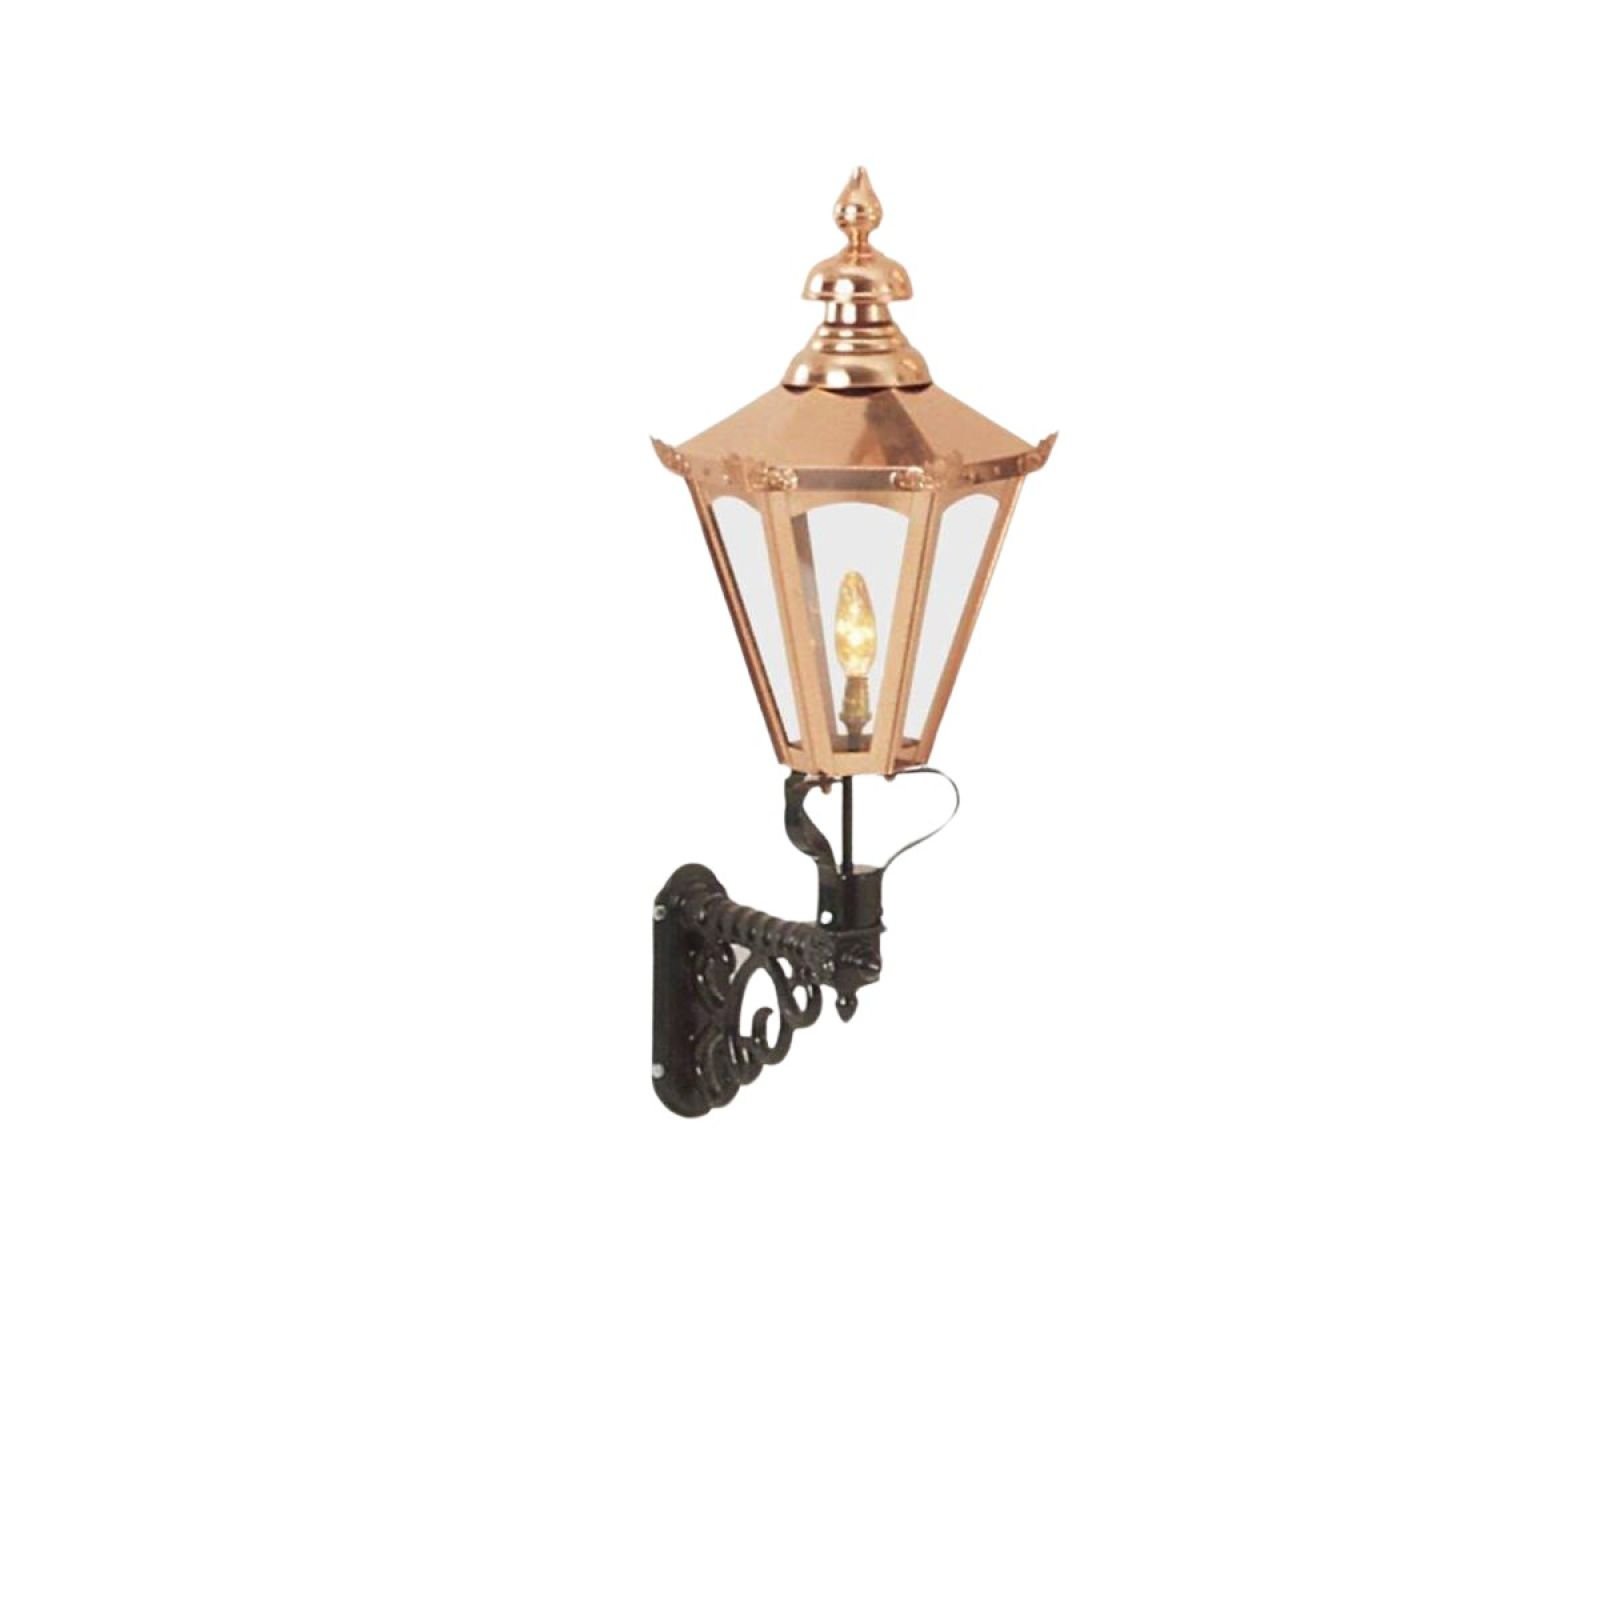 Medium hexagonal copper wall lantern with cast bracket